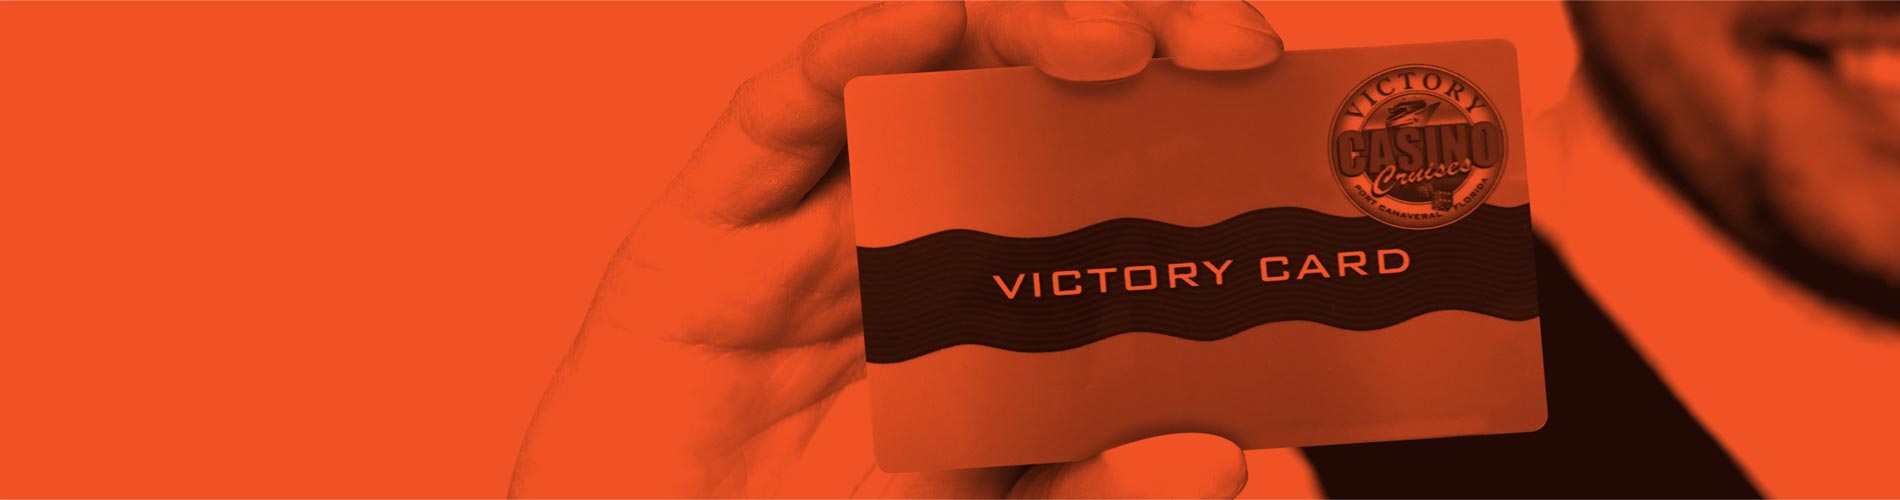 Victory Card Membership Levels